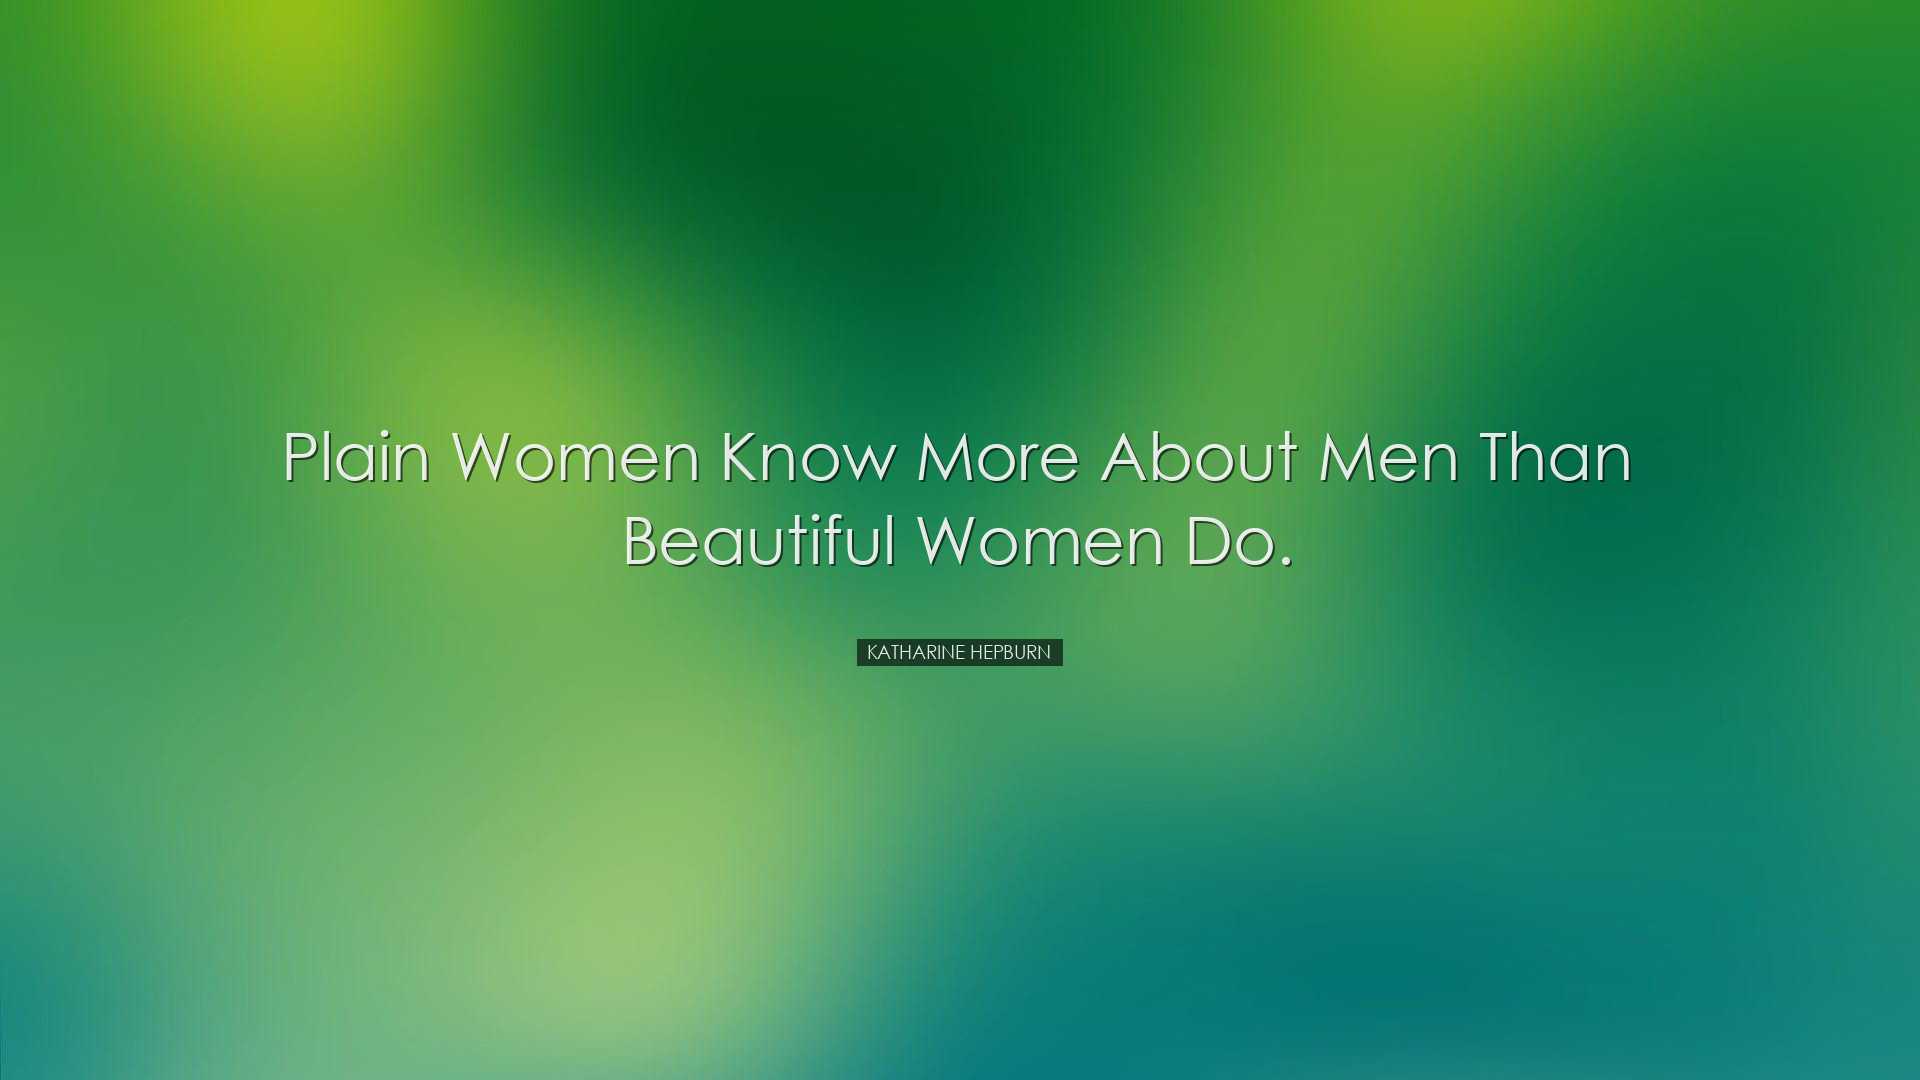 Plain women know more about men than beautiful women do. - Kathari